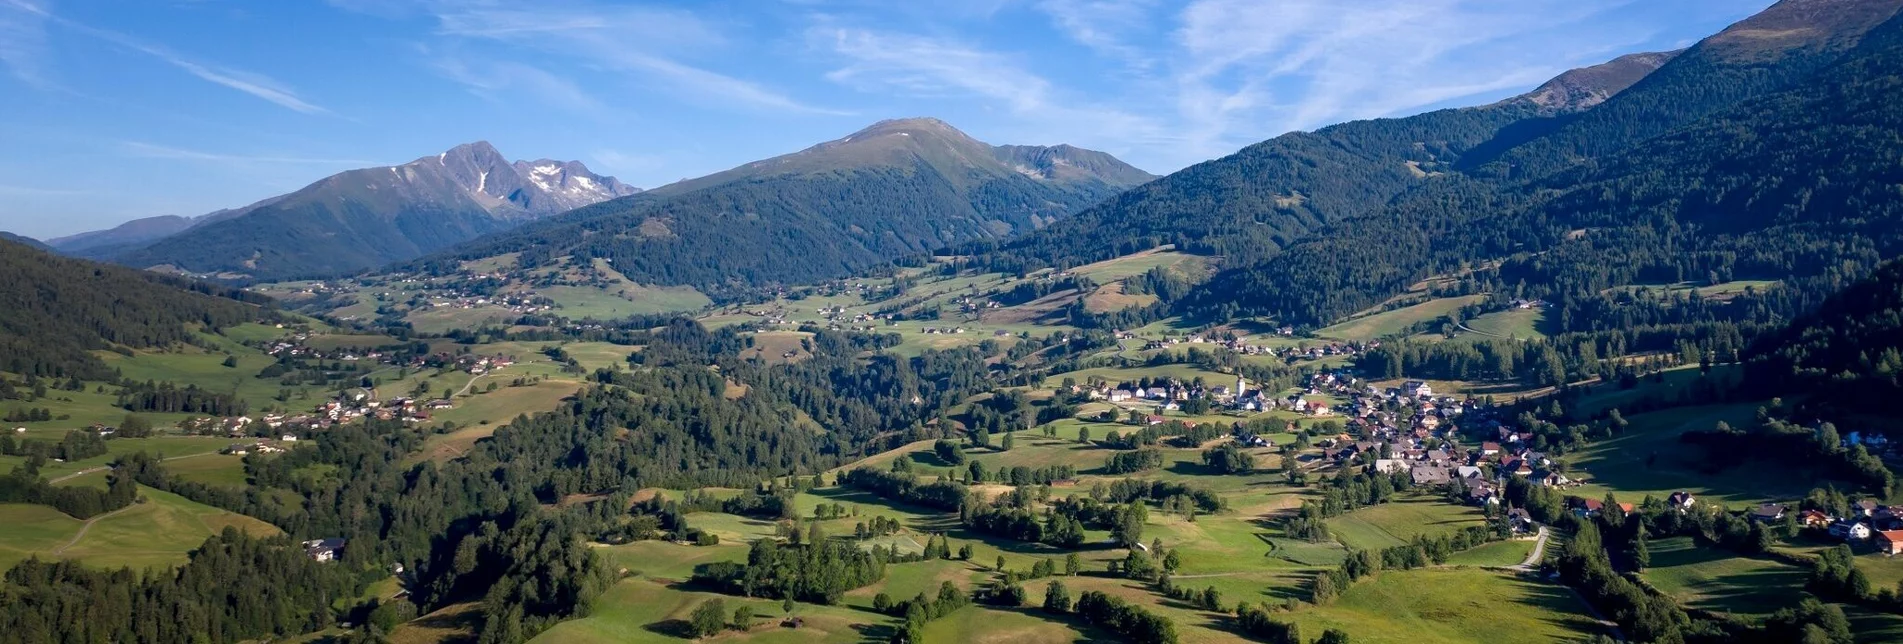 Hiking route Grazerhütte - Touren-Impression #1 | © Tourismusverband Region Murau